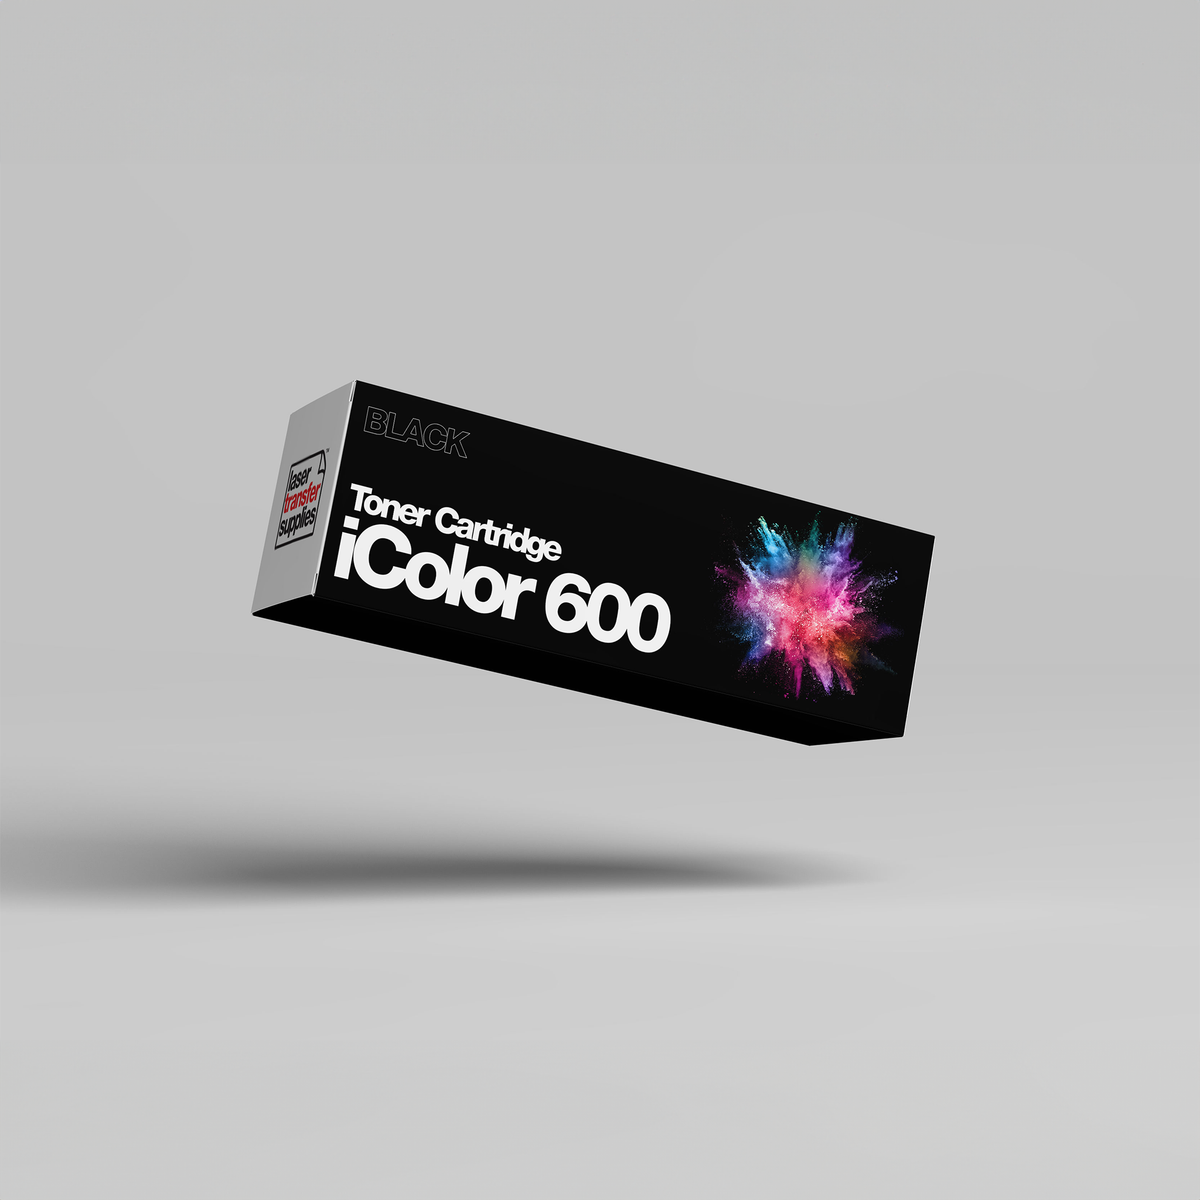 IColor 600 Standard Toner